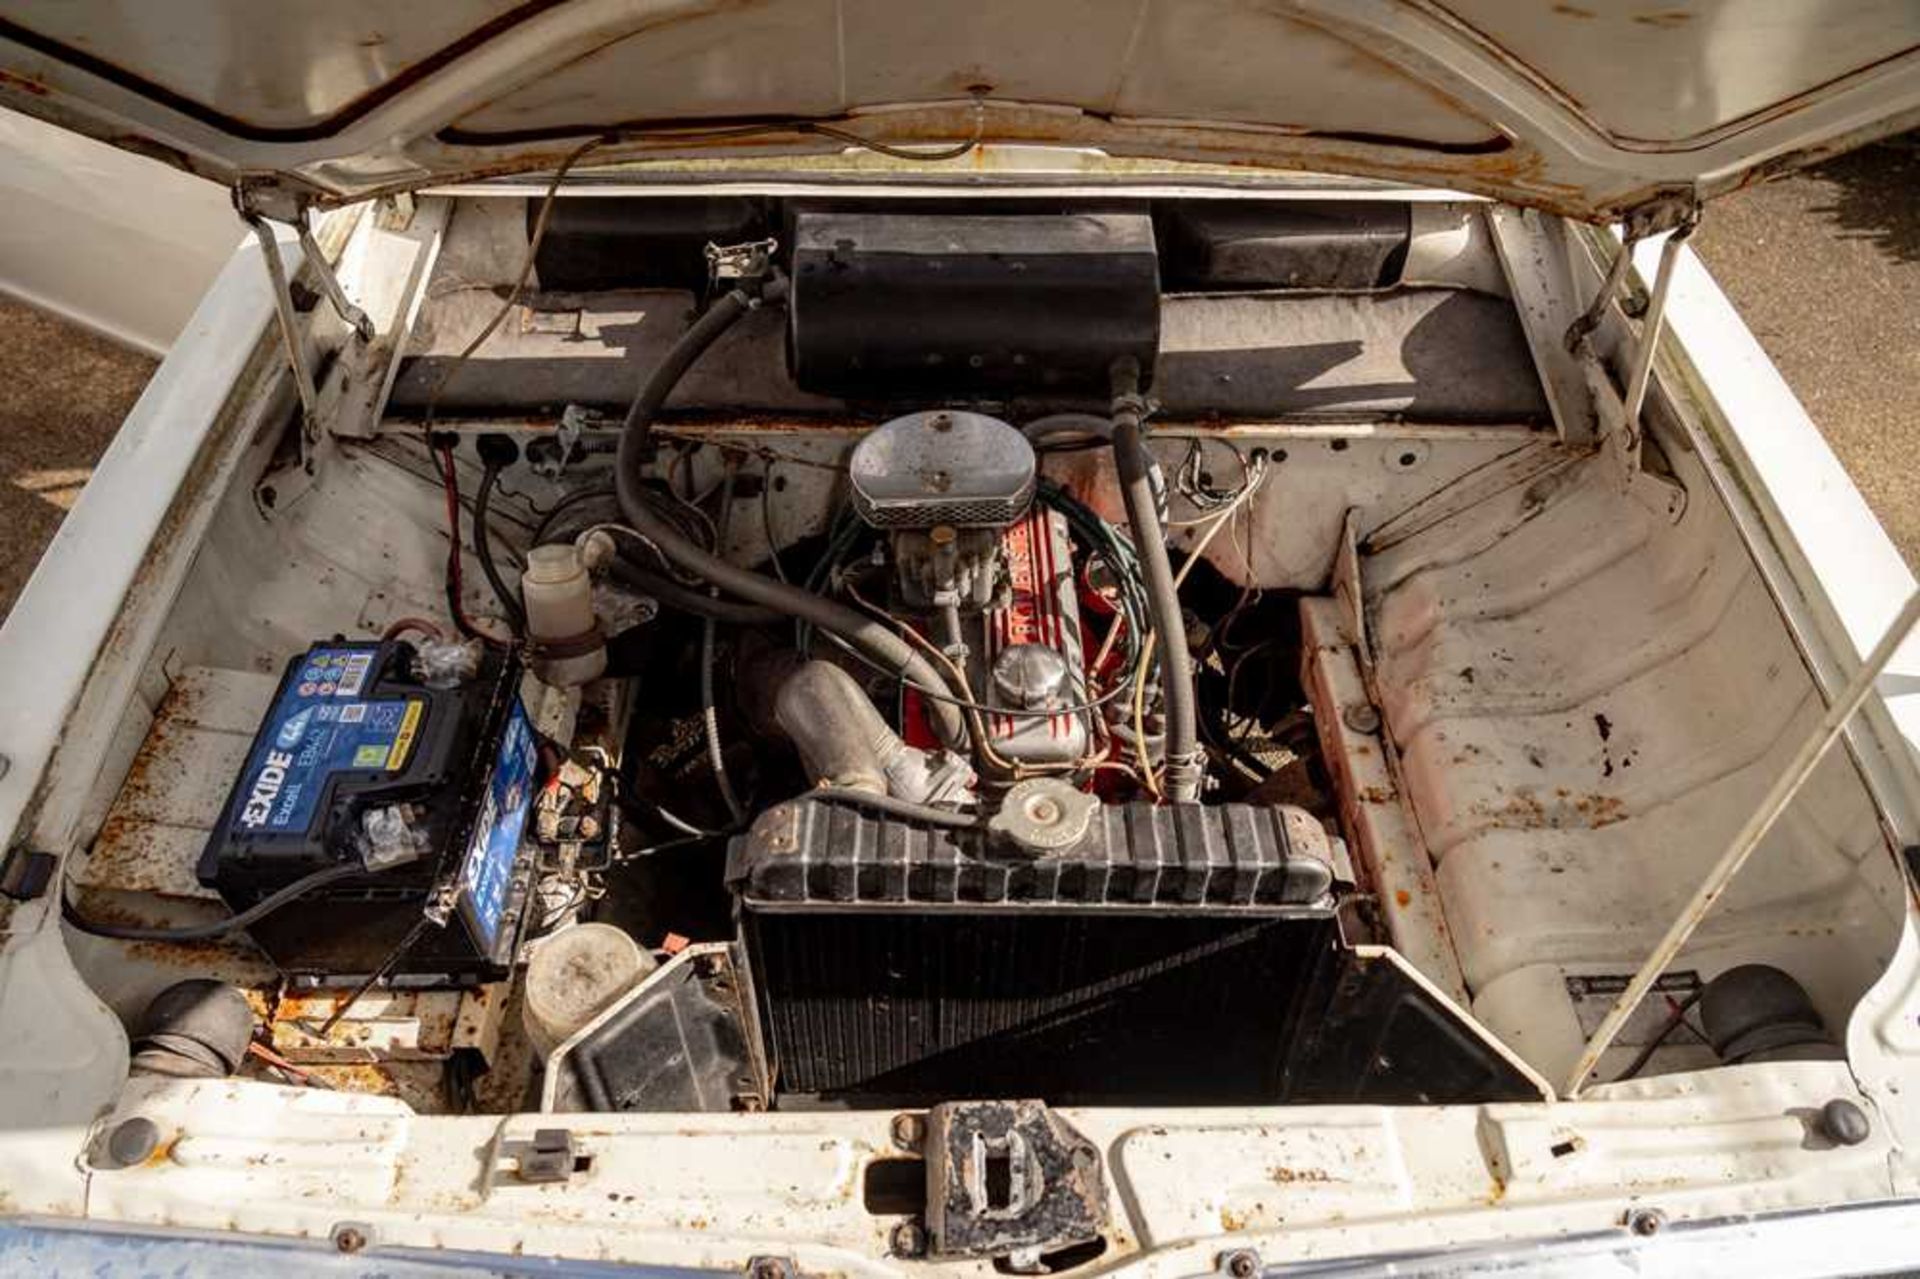 1967 Vauxhall Viva HB Period Blydenstein ‘Stage 2’ conversion - Image 23 of 33